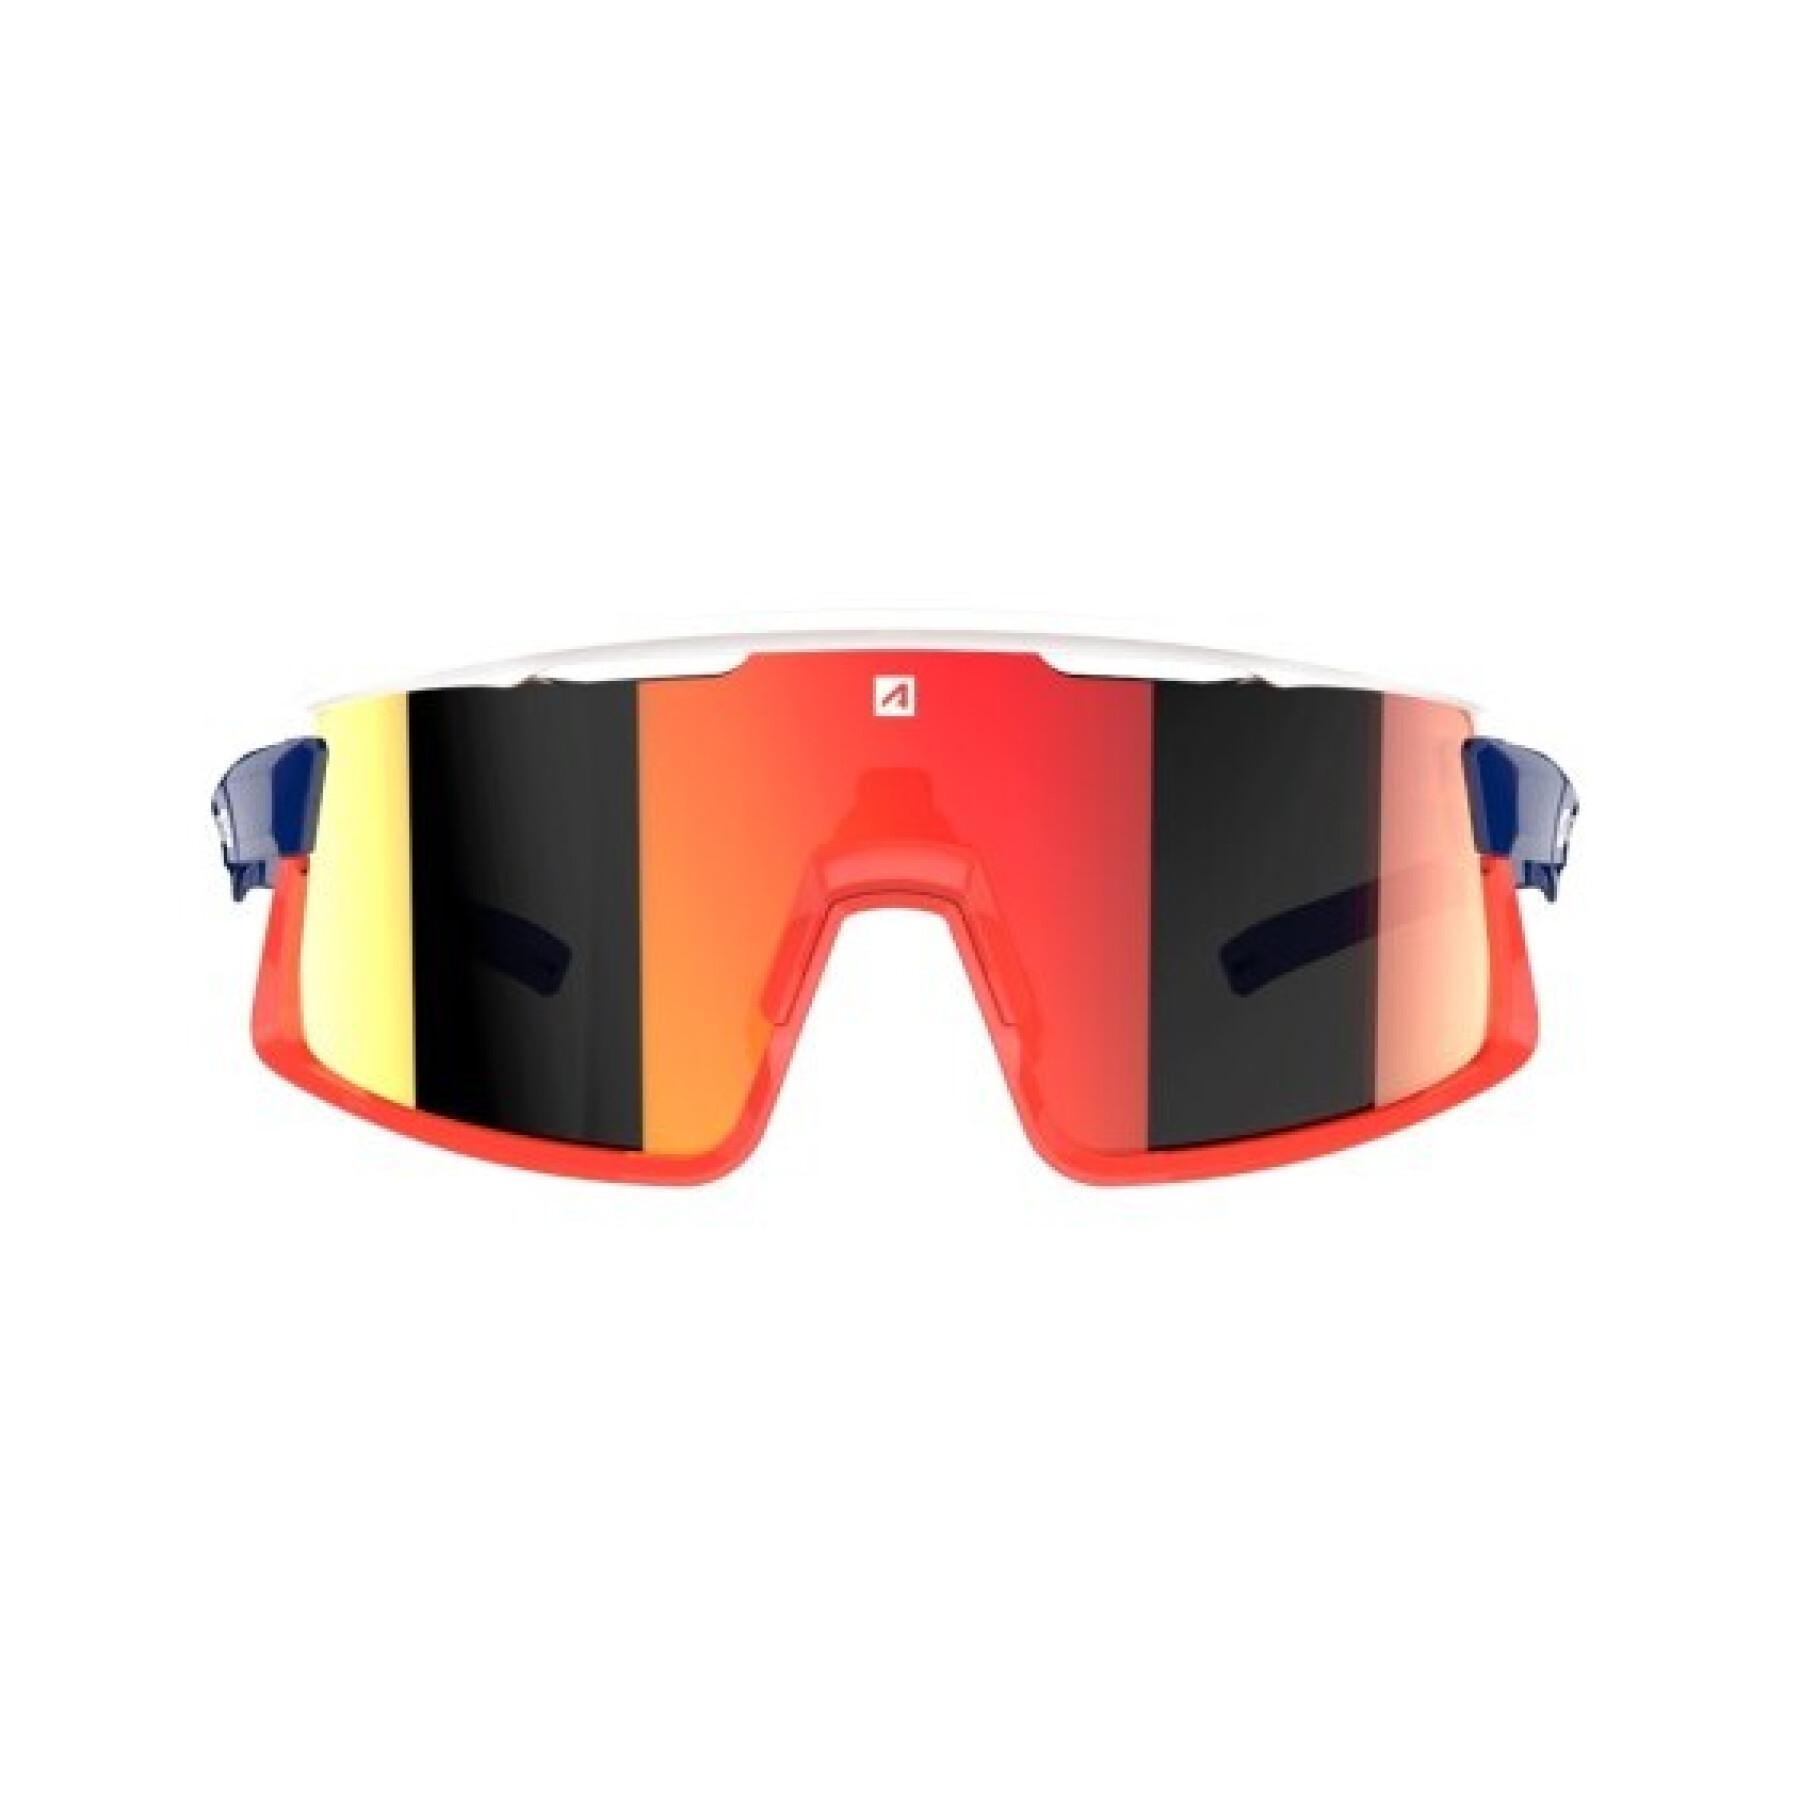 Multilayer hydrophobic goggles AZR Pro Race Rx